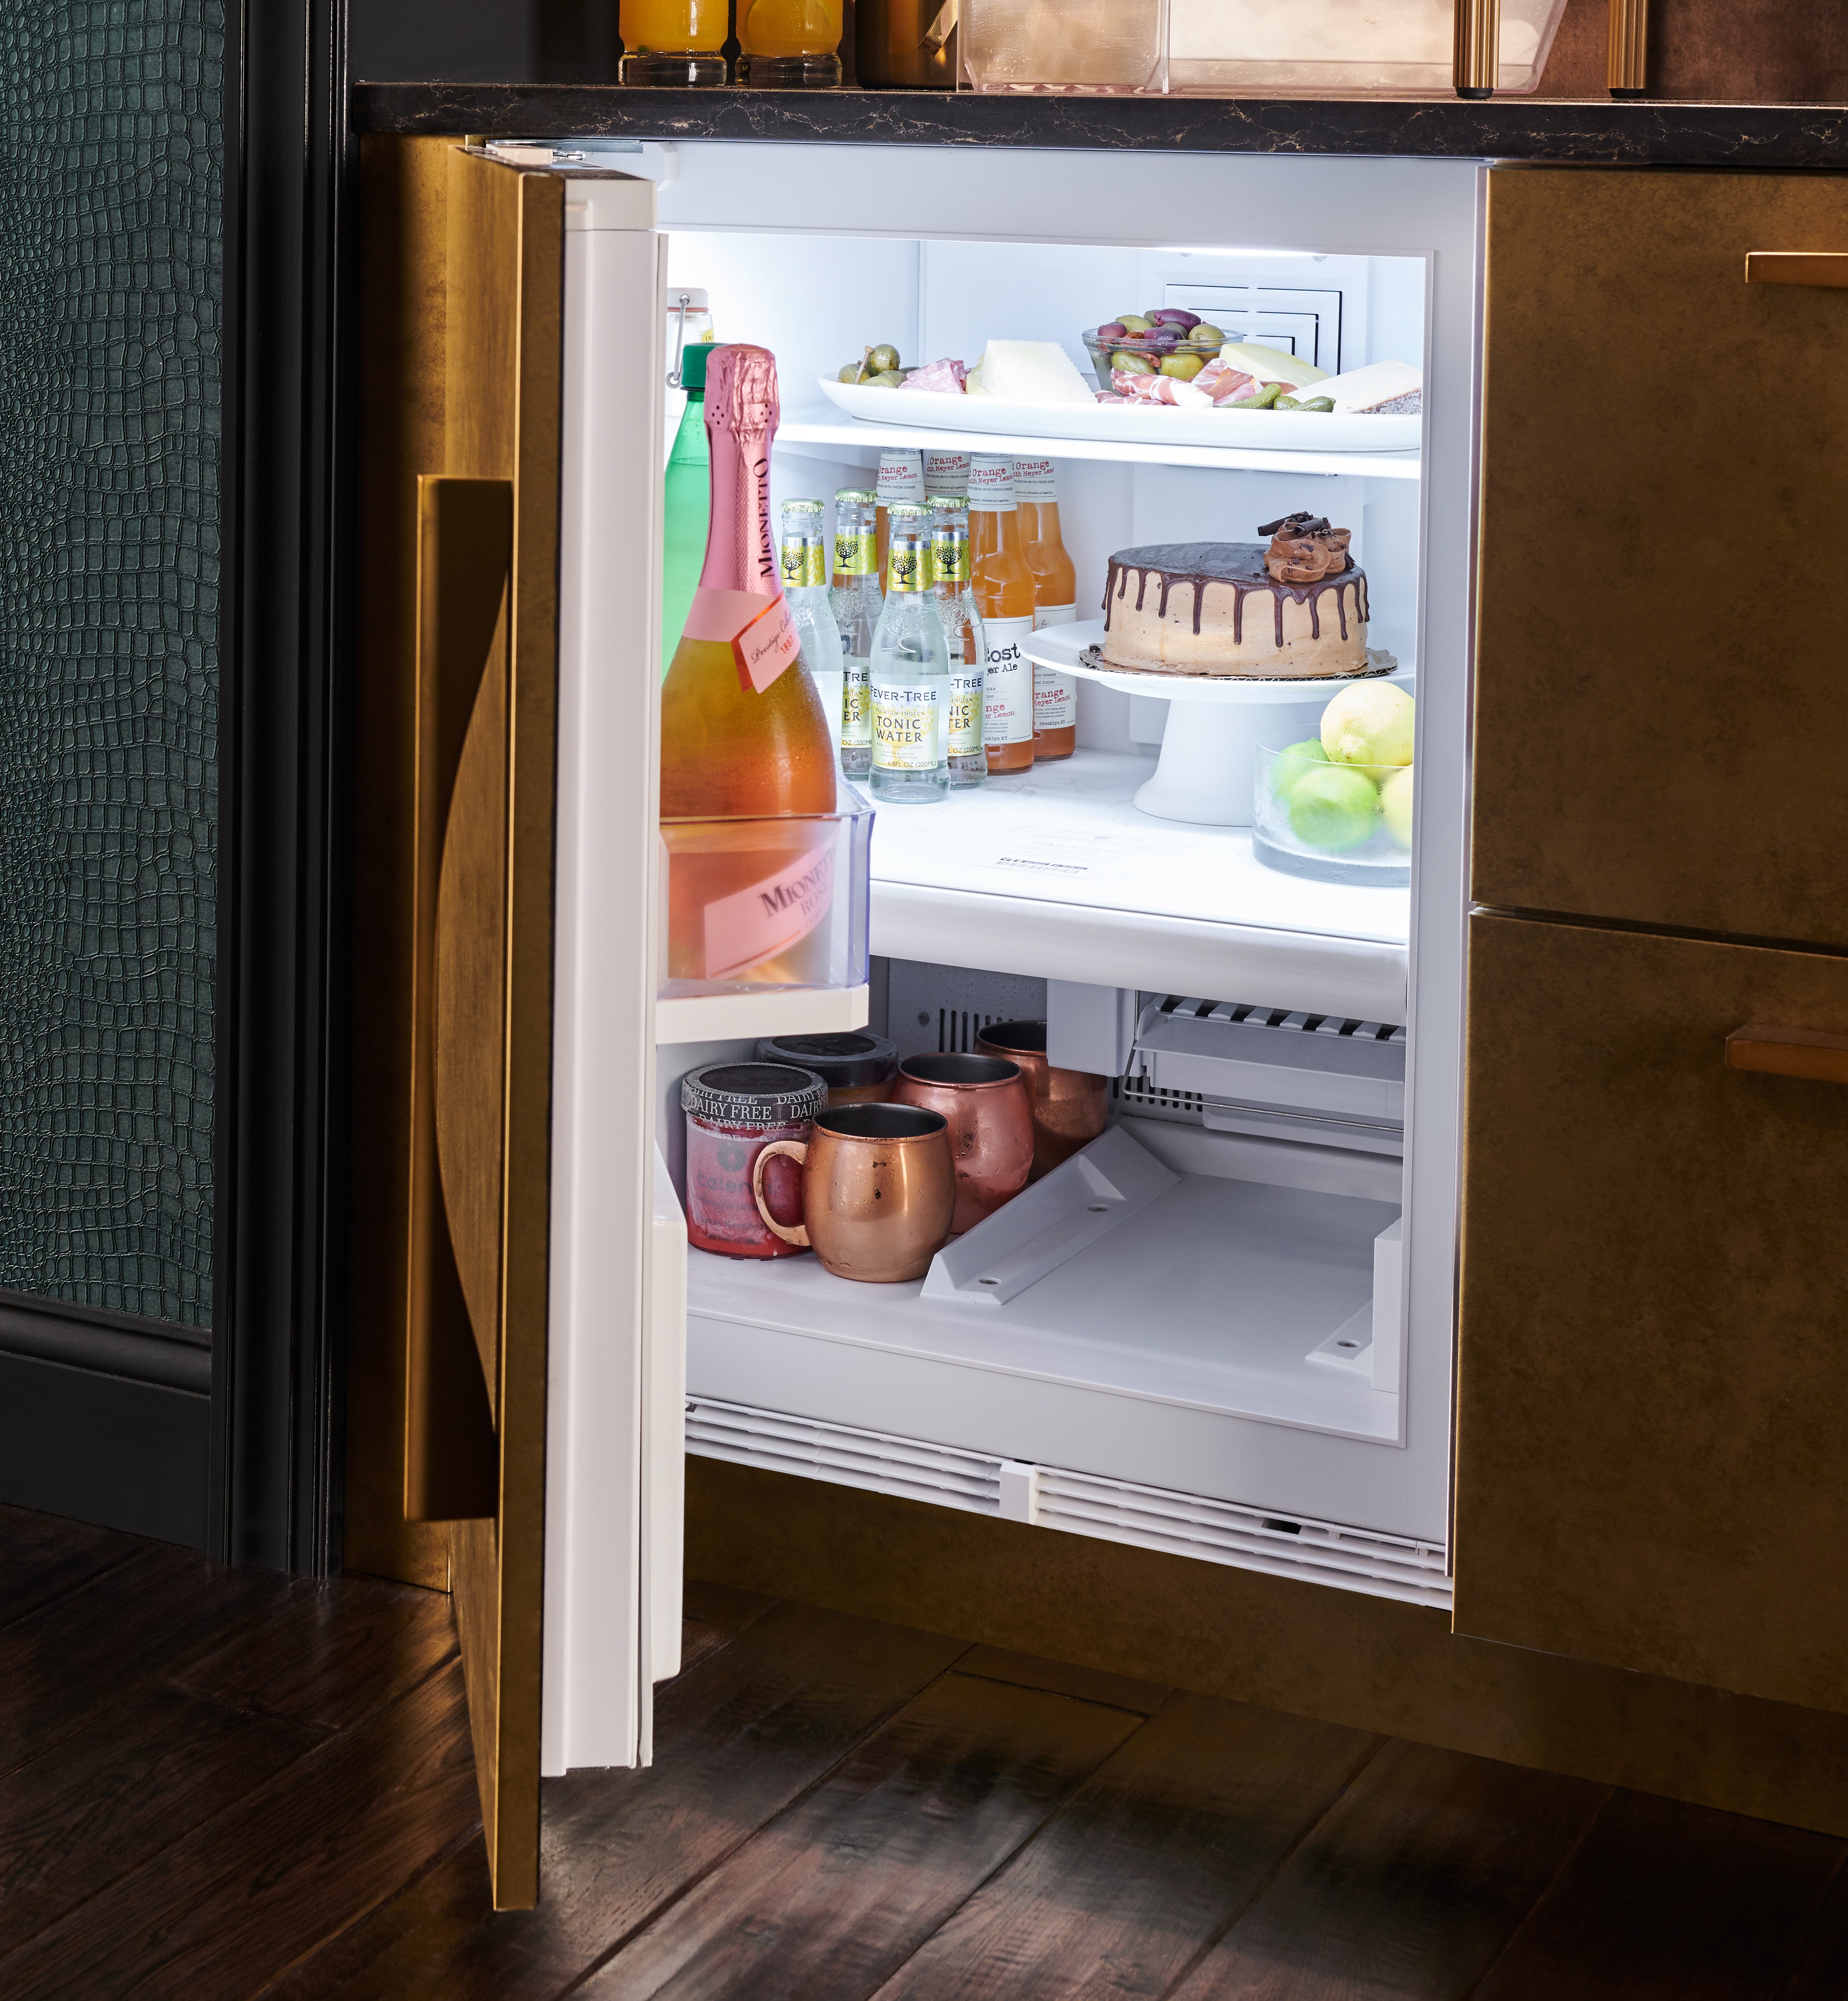 24 Designer Undercounter Refrigerator/Freezer with Ice Maker – Panel Ready